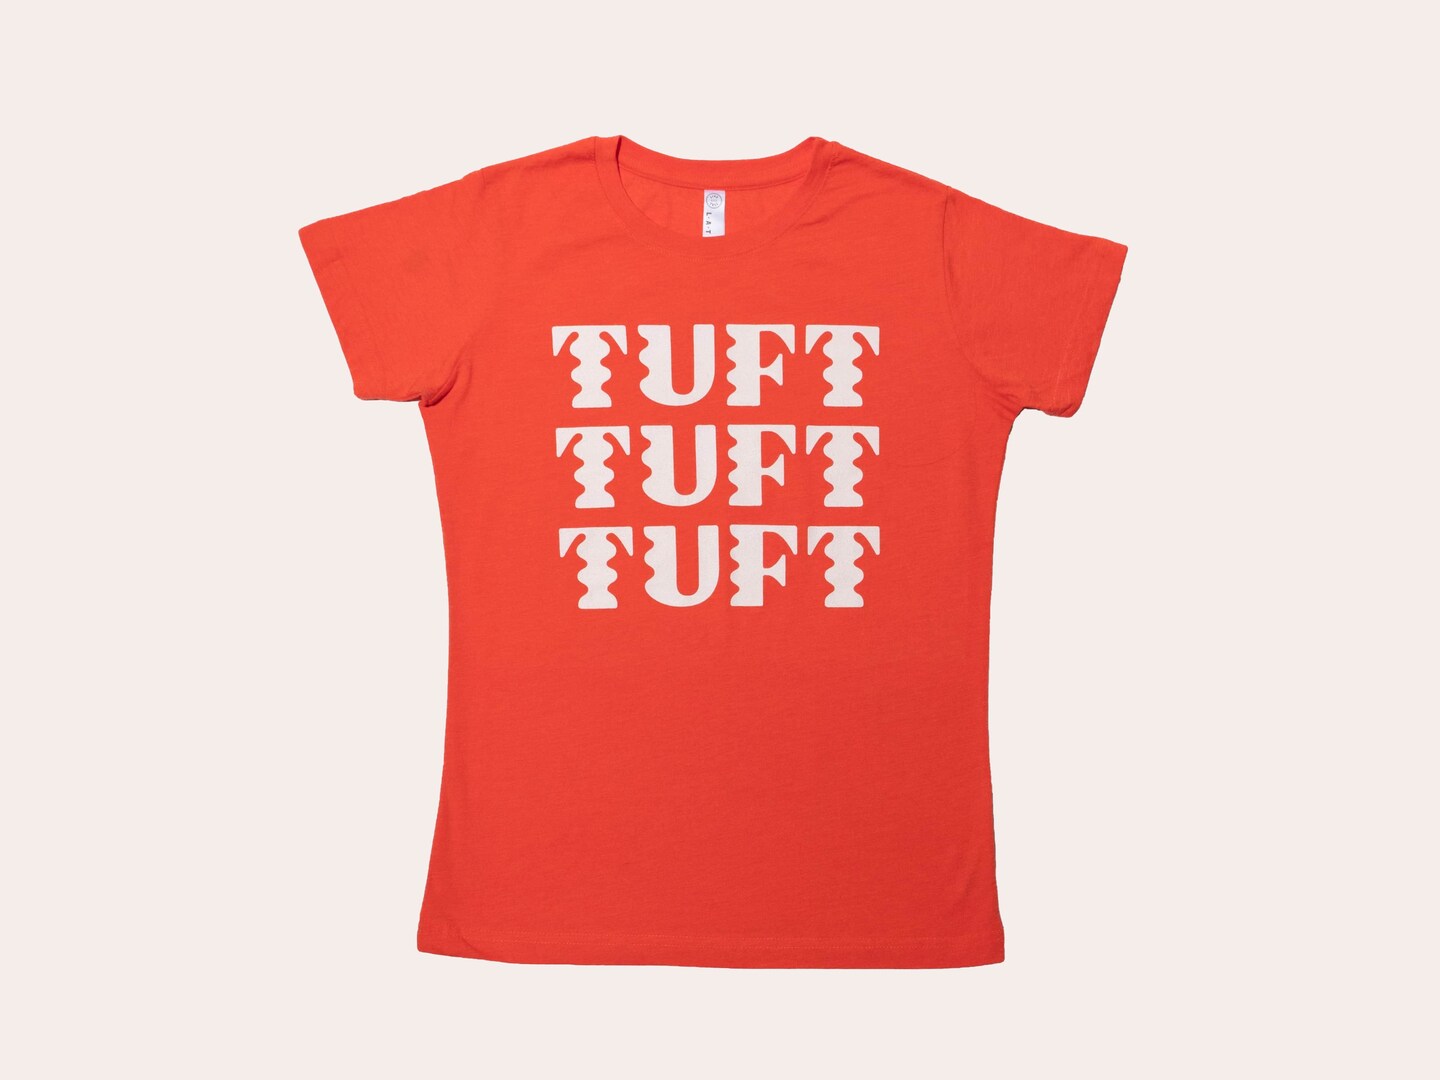 Orange Tuft Tuft Tuft Tee (Fitted)